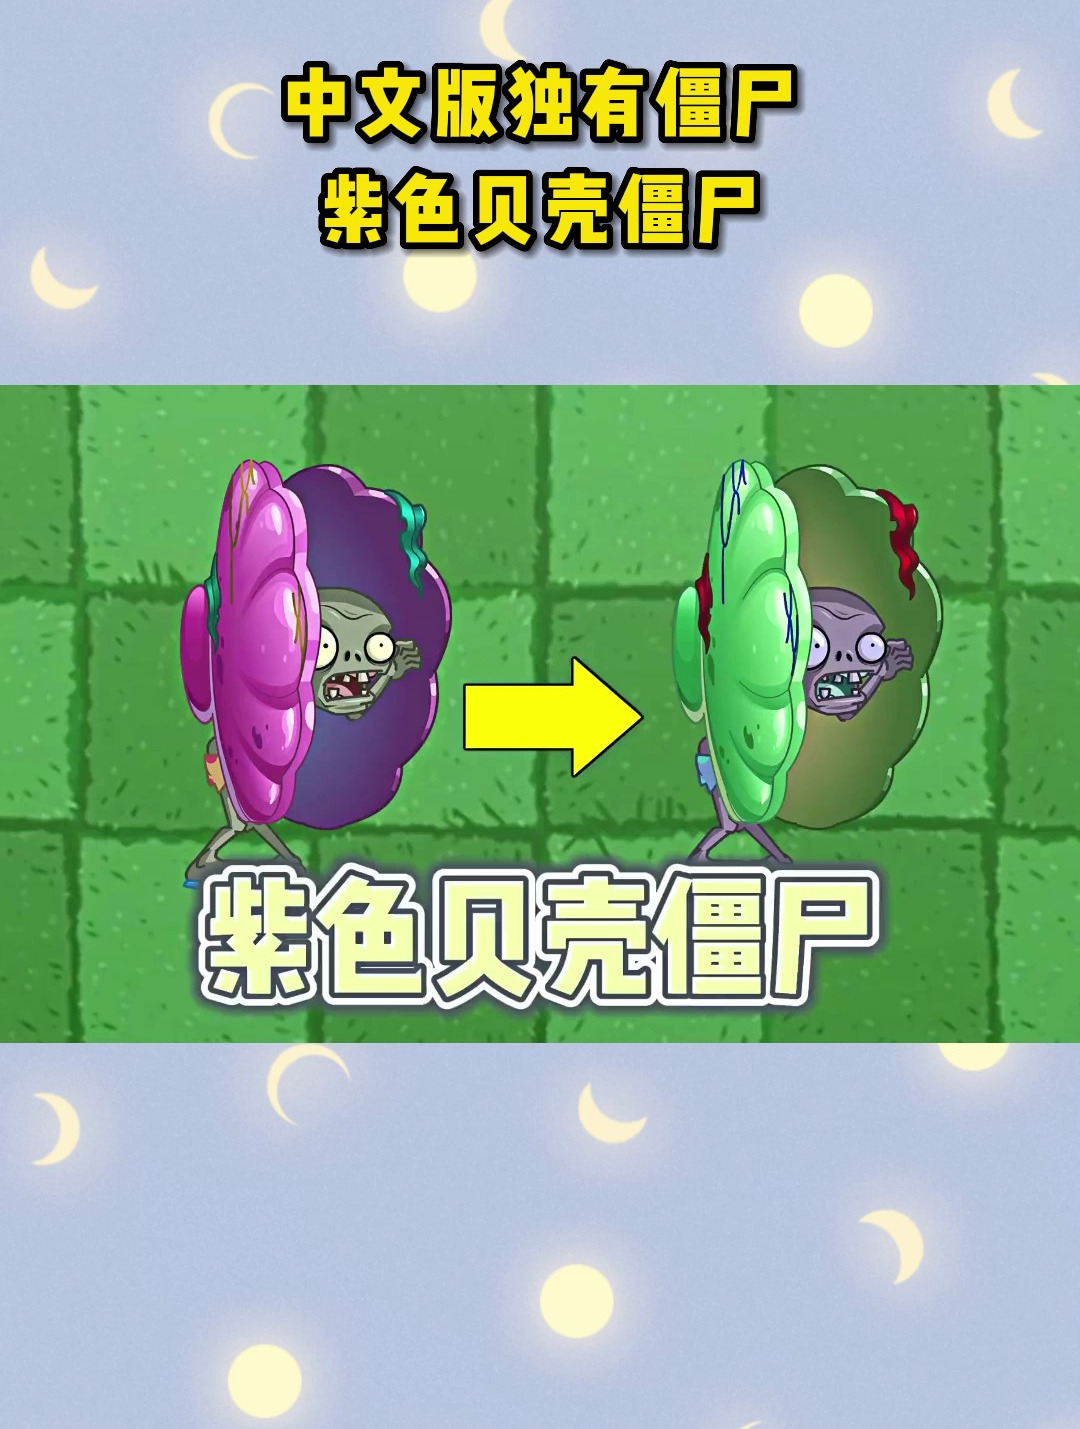 pvz2:中文版独有僵尸,紫色贝壳僵尸!